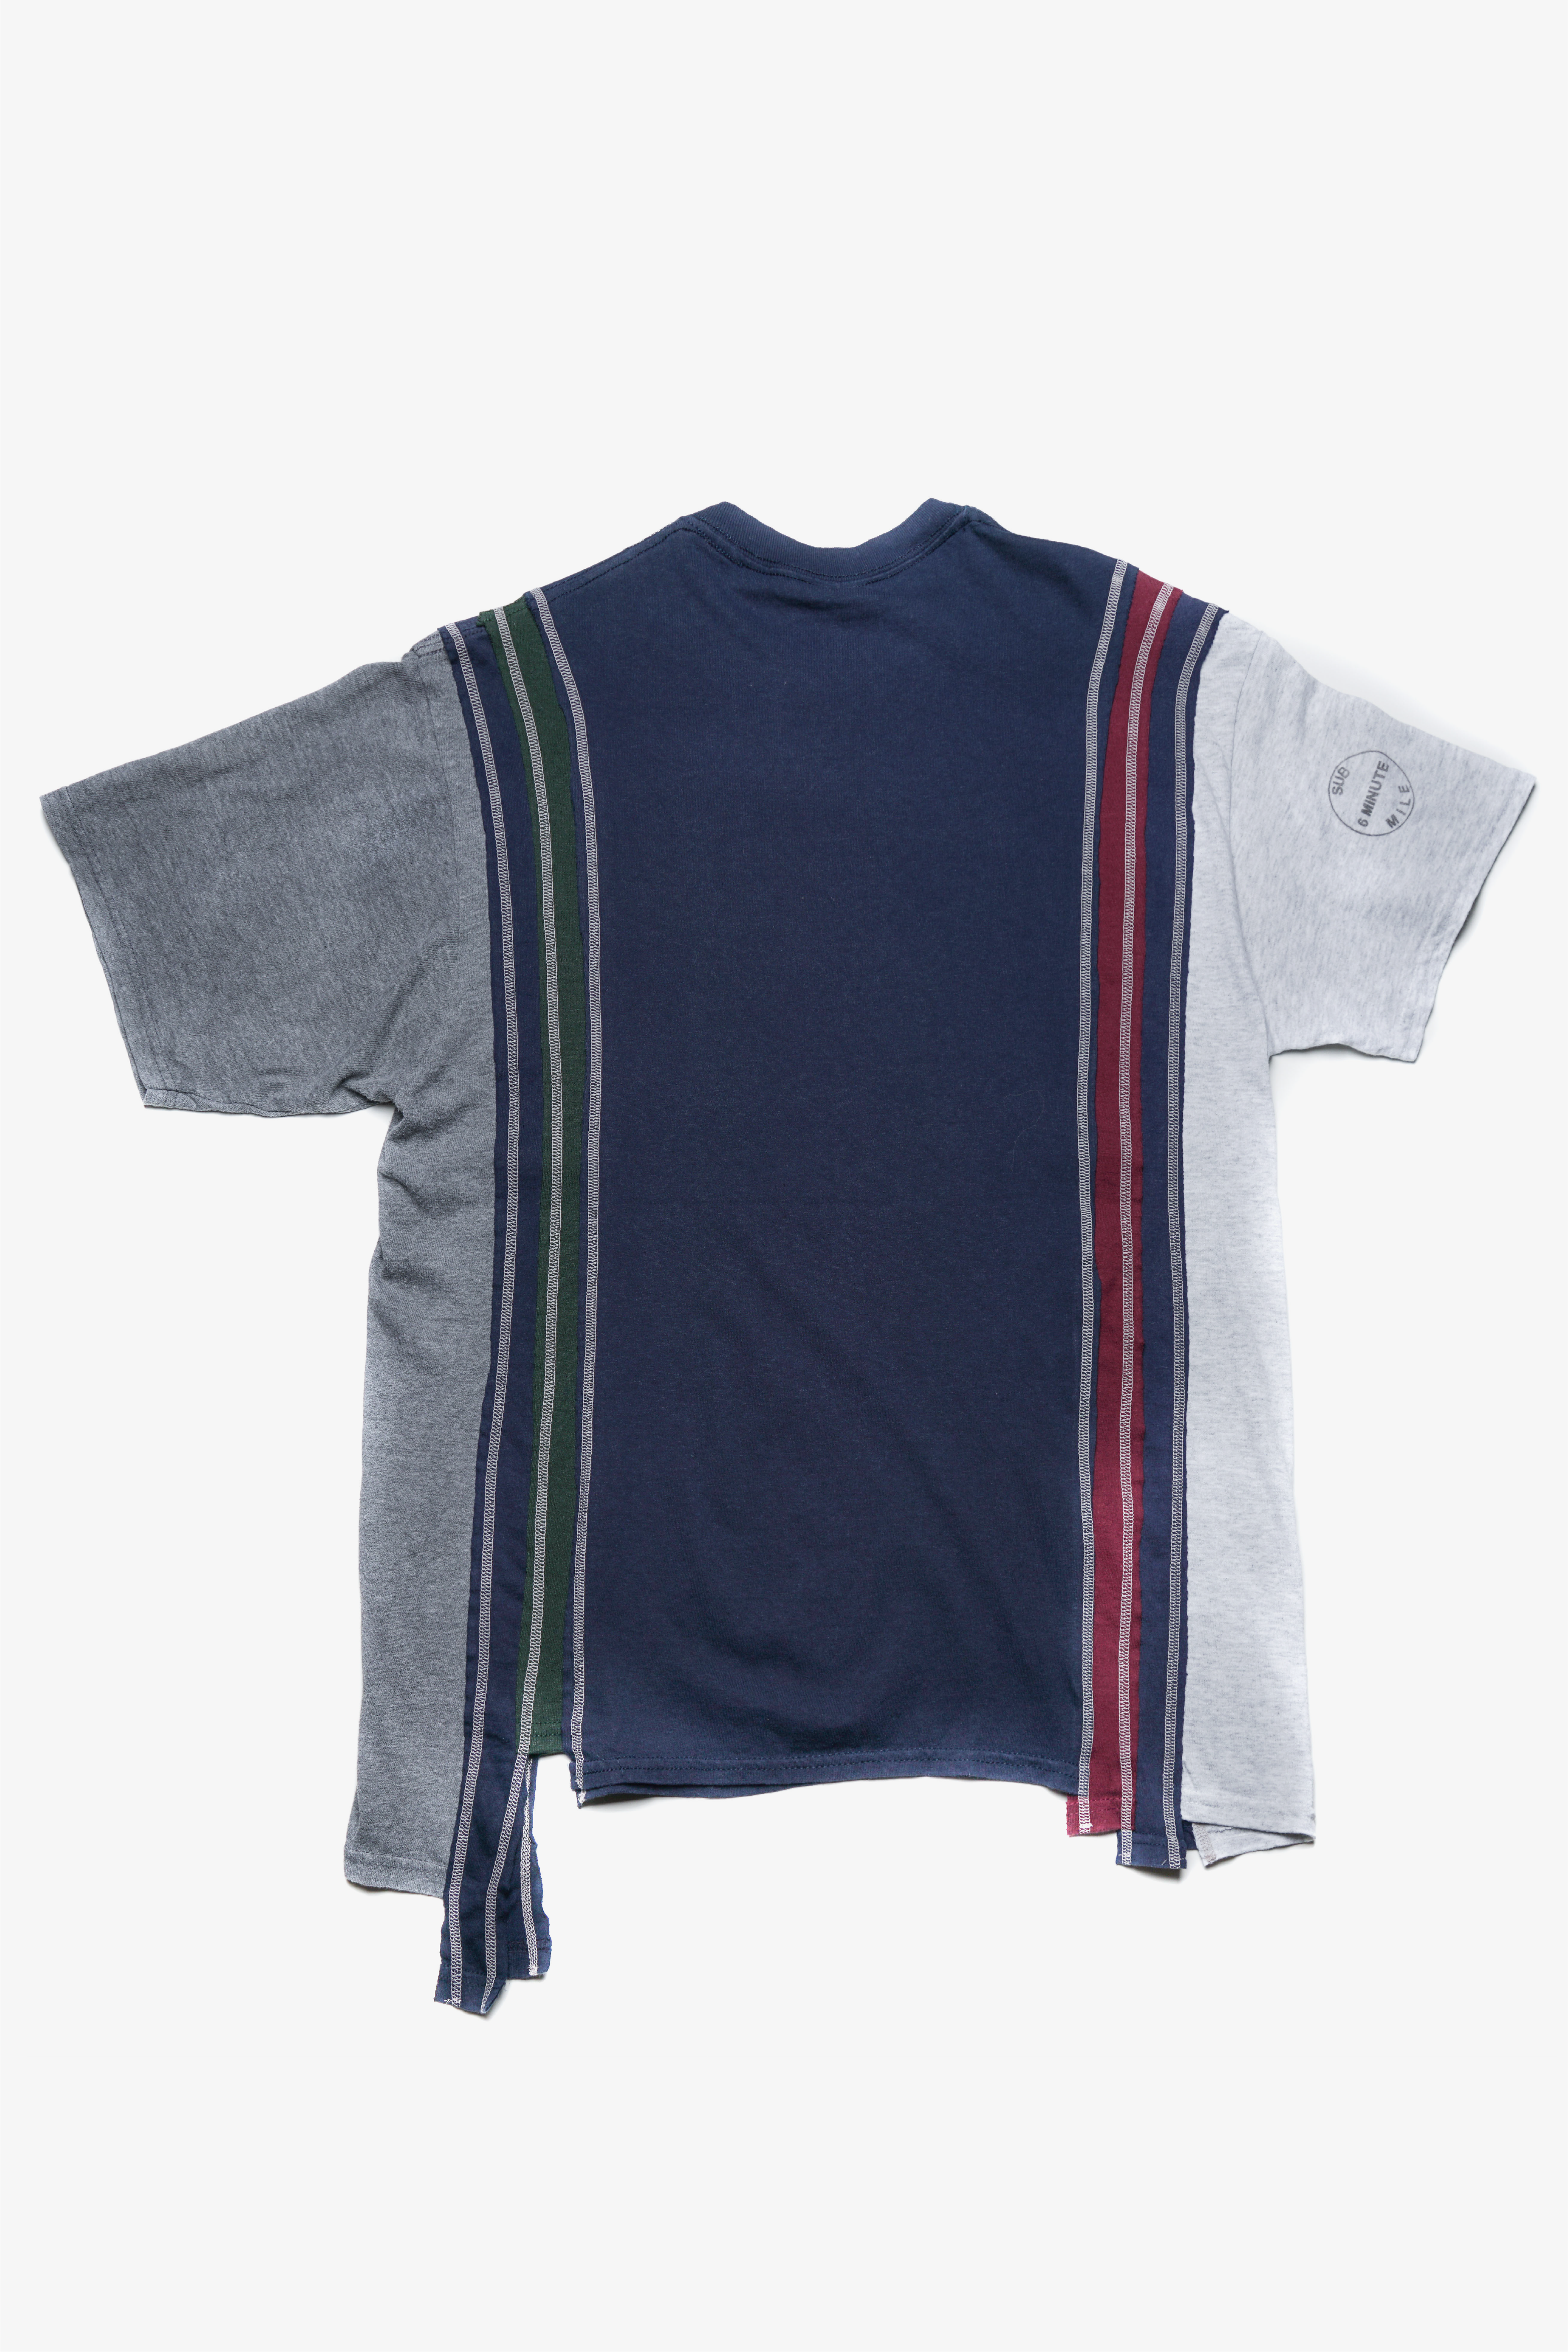 Selectshop FRAME - NEEDLES 7 Cuts College Tee - L(A) T-Shirts Dubai